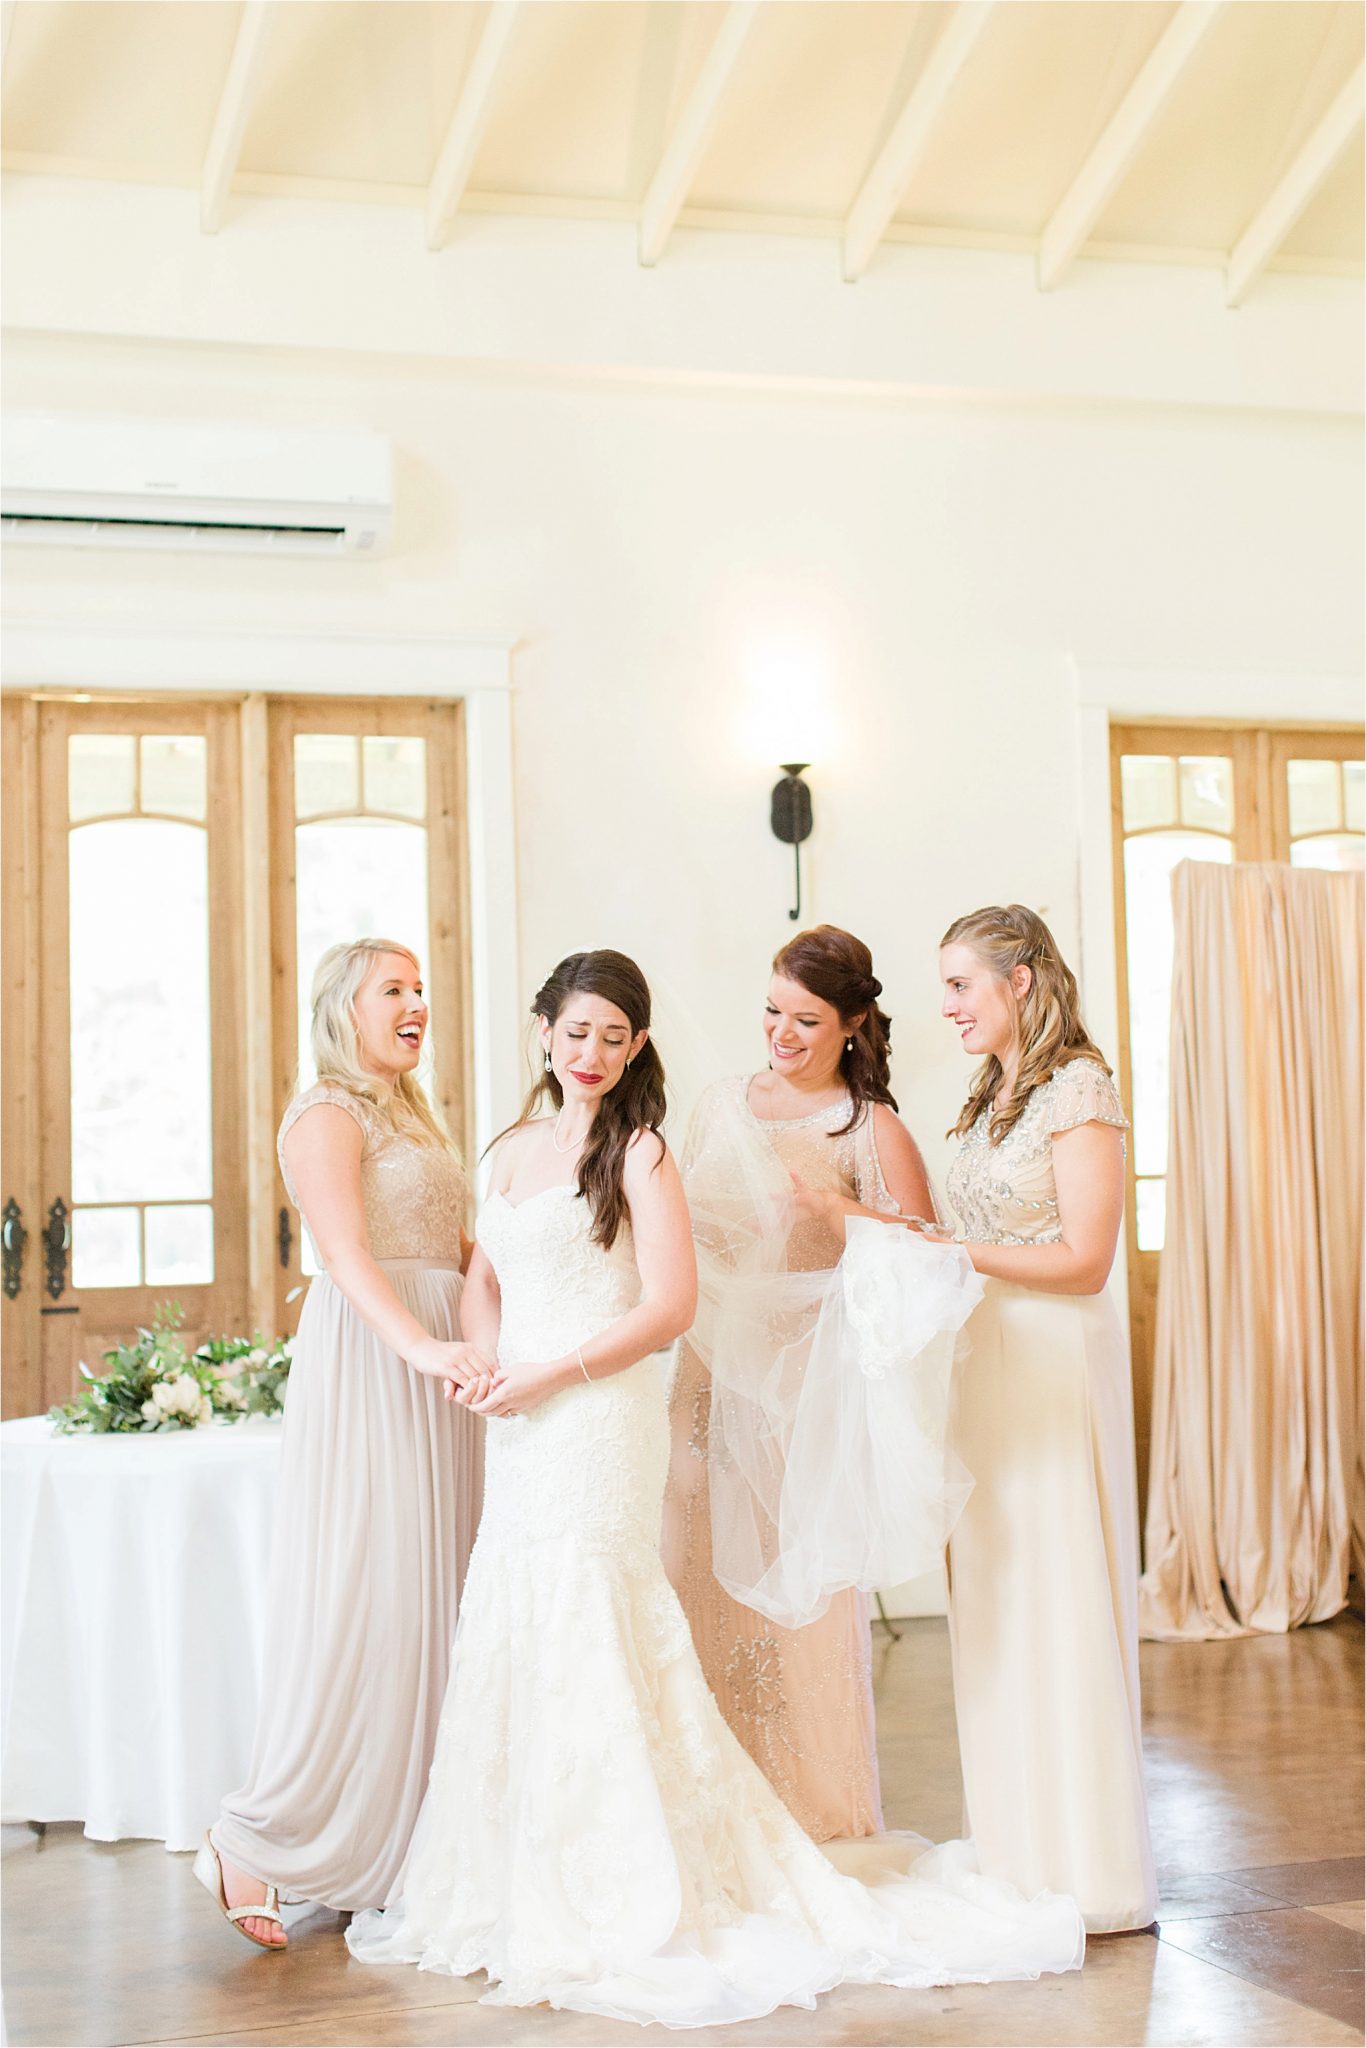 Bridesmaids-neutrals-champagnes-dresses-bride-brooch-hair-piece